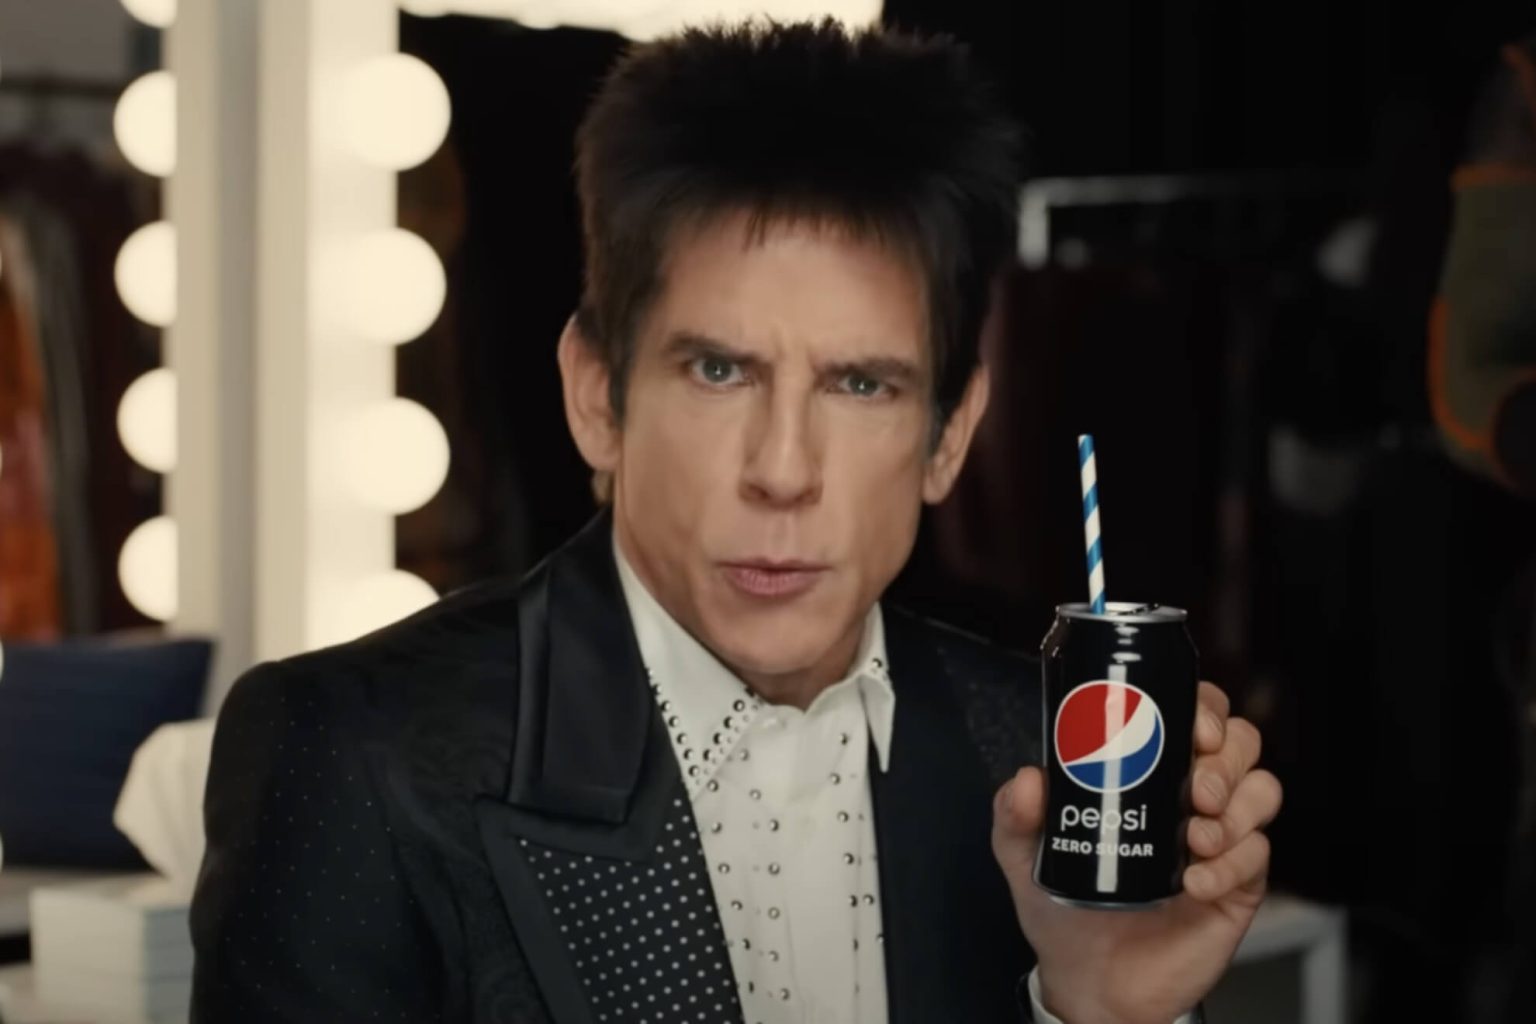 Pepsi Zero Sugar Taps Fictional Icon Zoolander As New Face